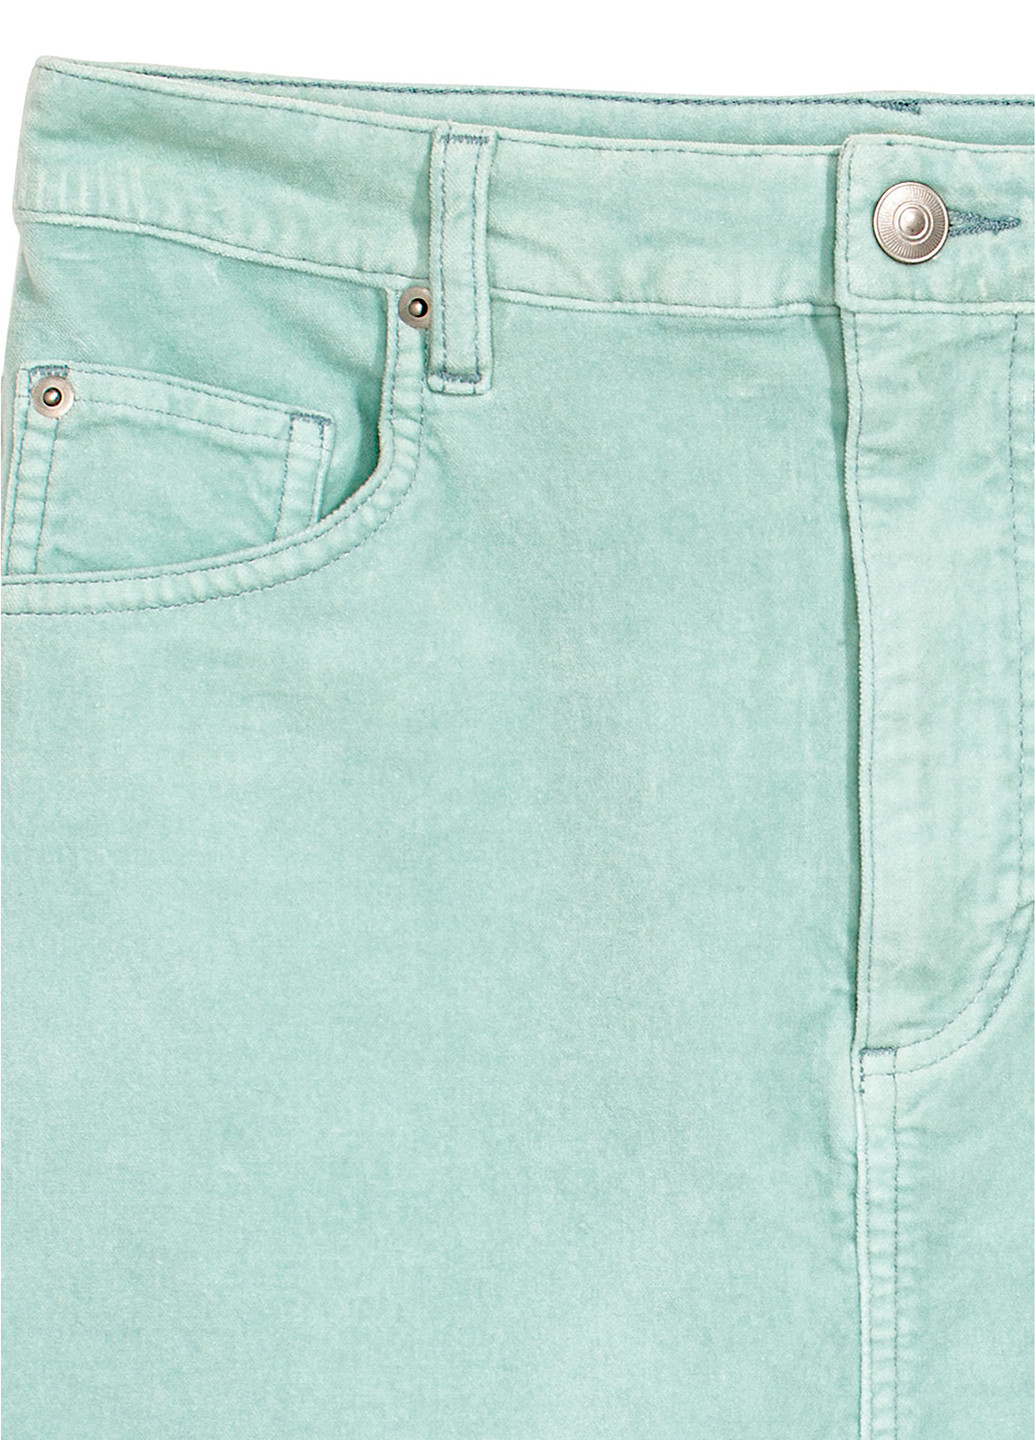 Мятная джинсовая однотонная юбка H&M а-силуэта (трапеция)